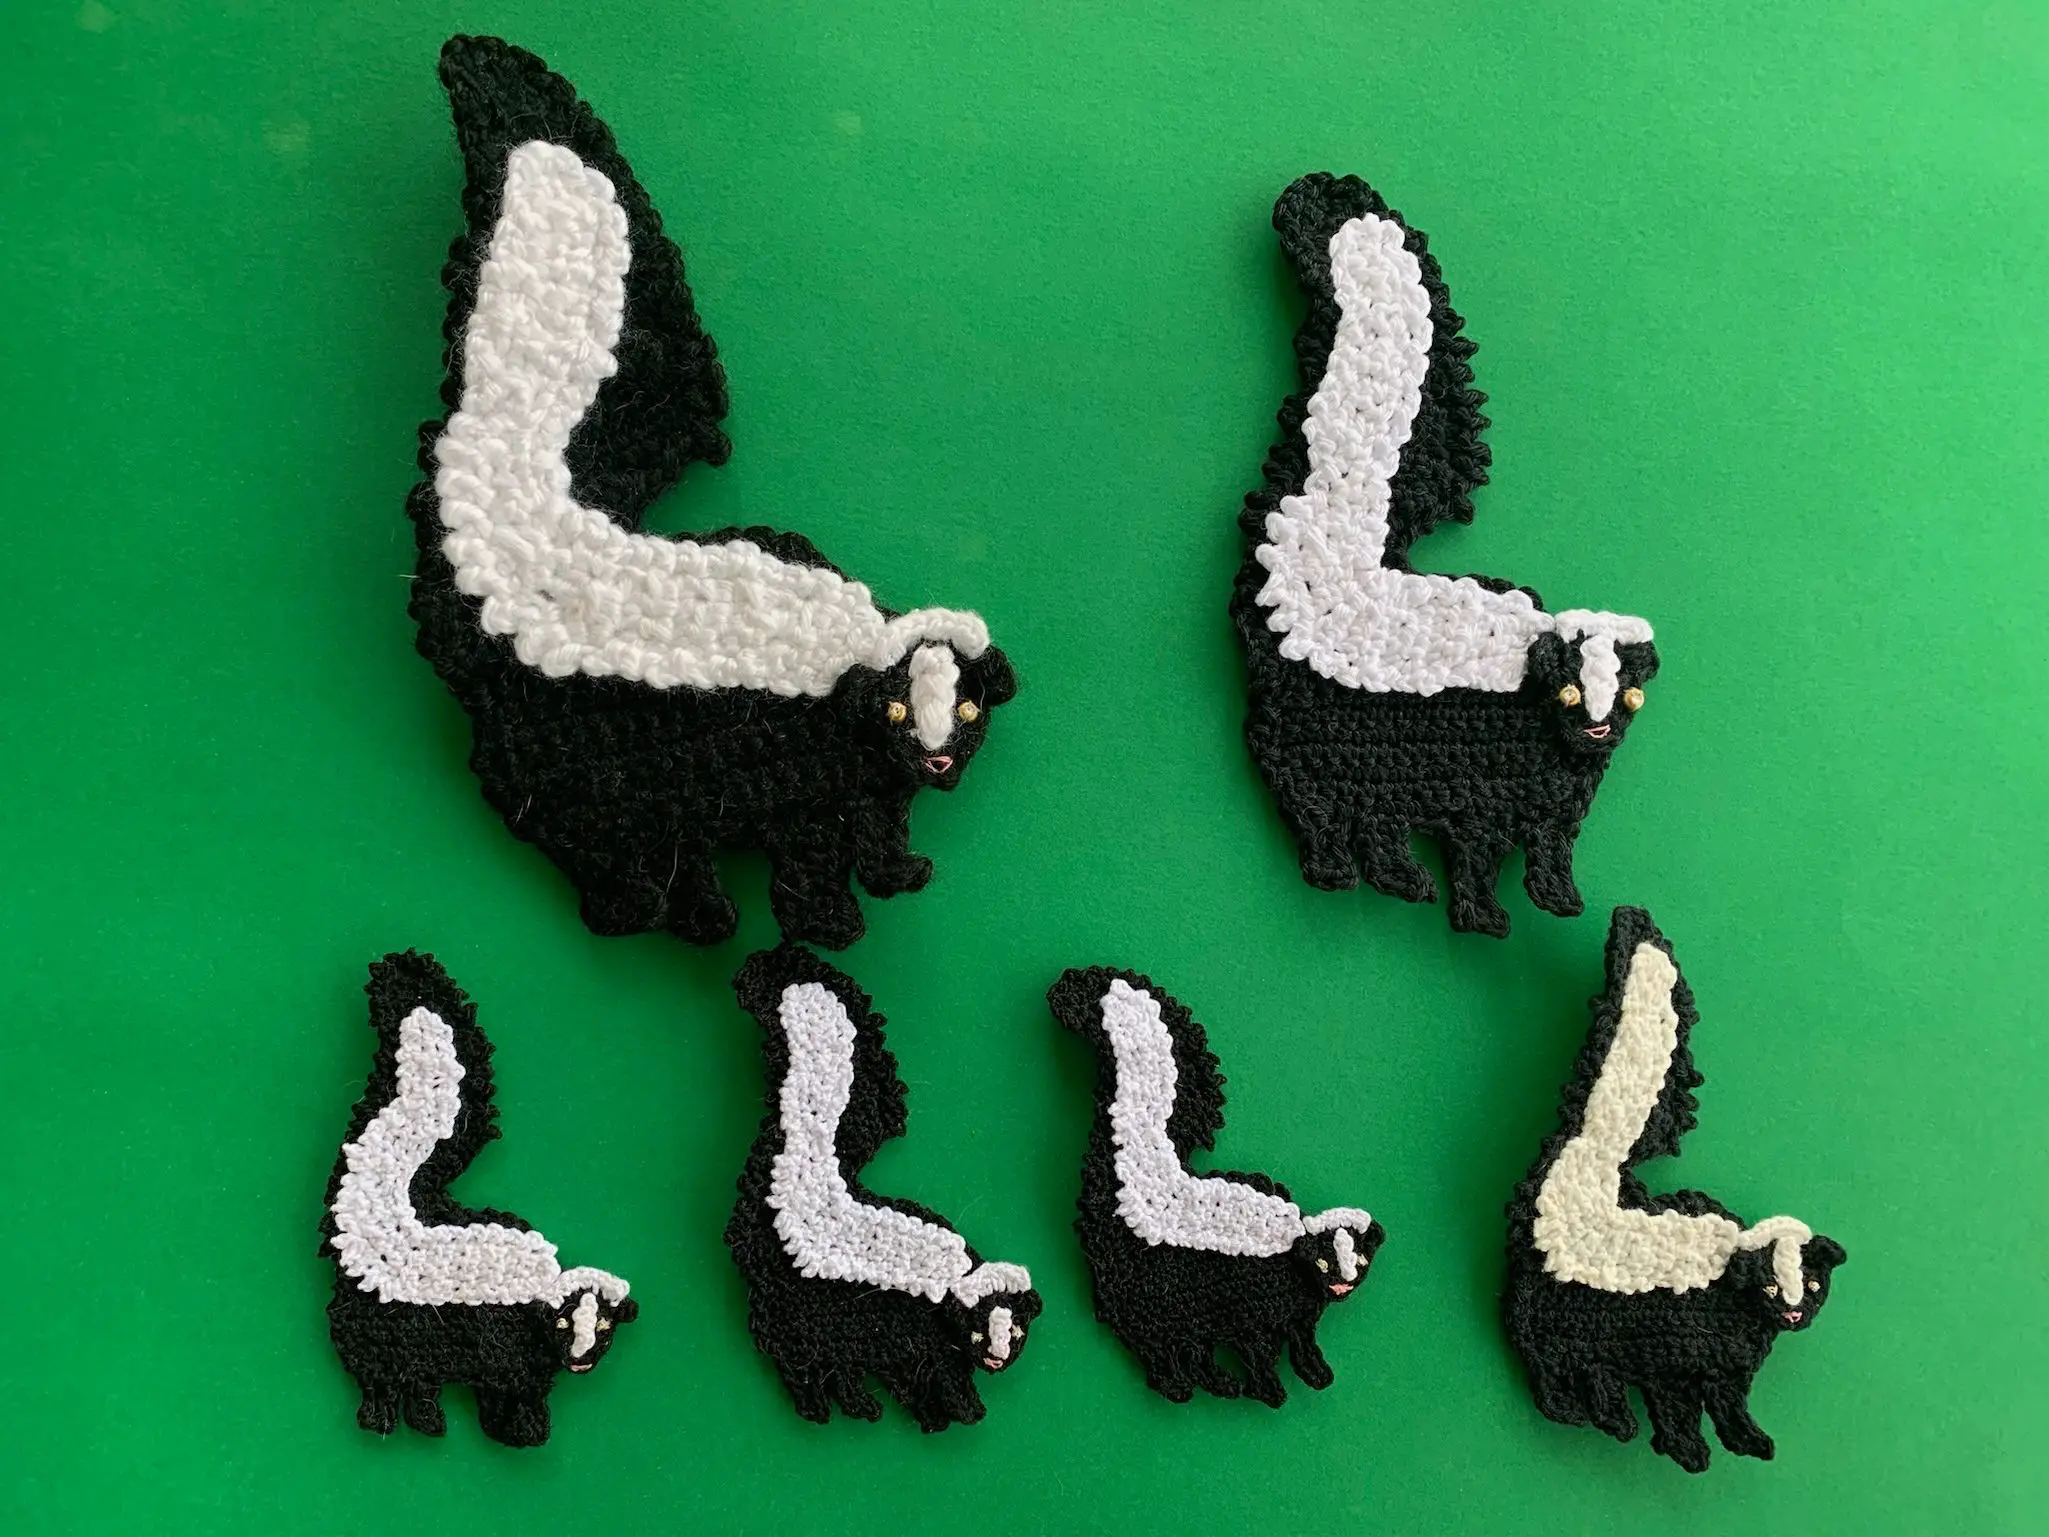 Finished crochet skunk 2 ply group landscape